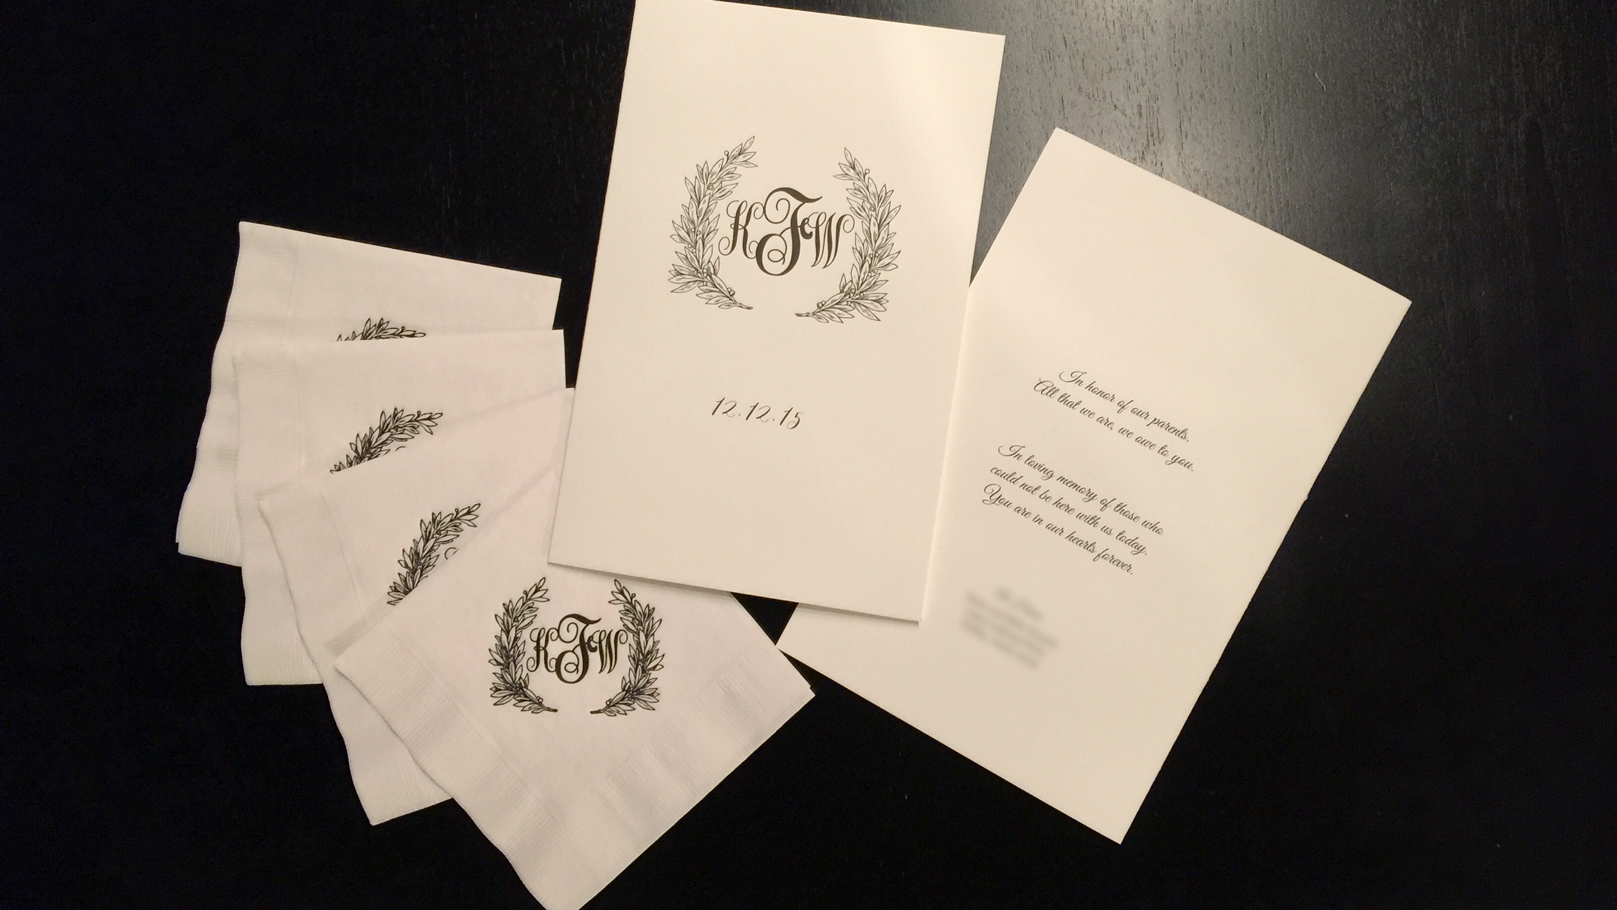 fingerprint design's photo of Katie's custom illustrated wedding programs and napkins